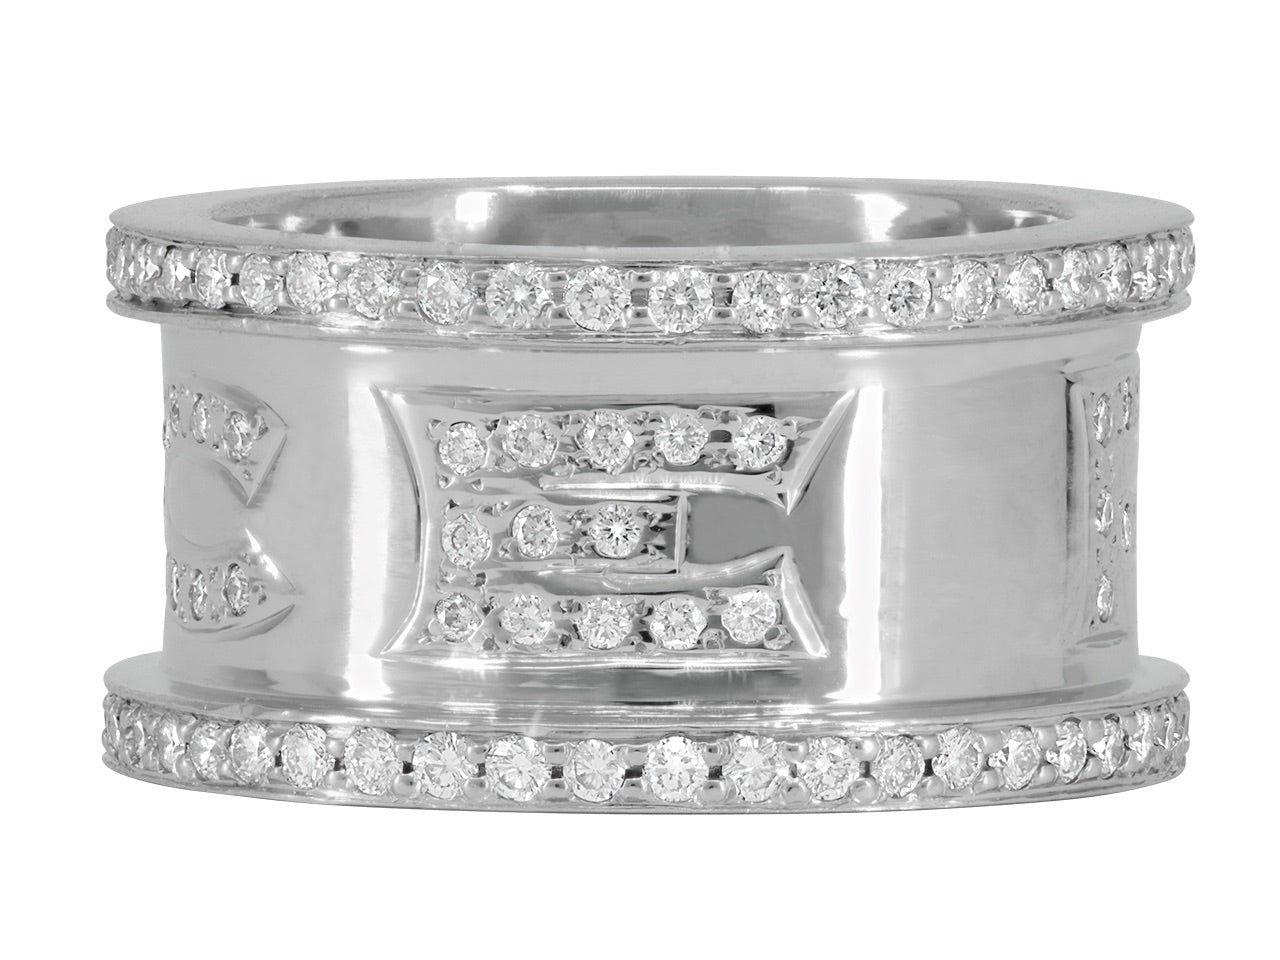 Diamond "PEACE" Ring in 18K White Gold